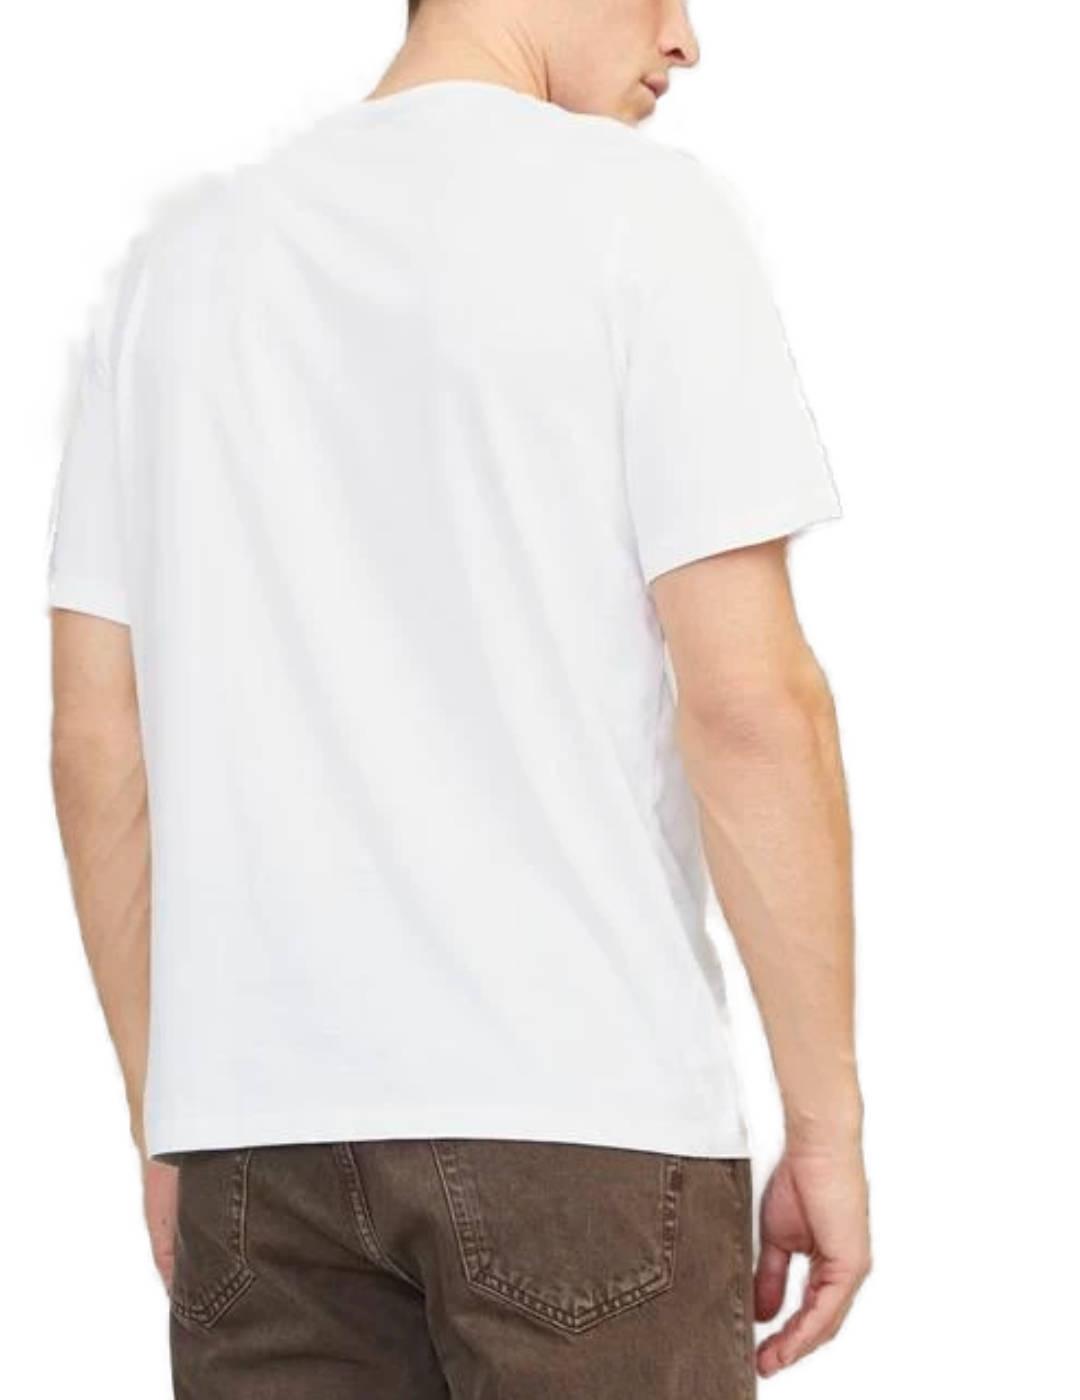 Camiseta Jack&Jones Summer blanca manga corta para hombre